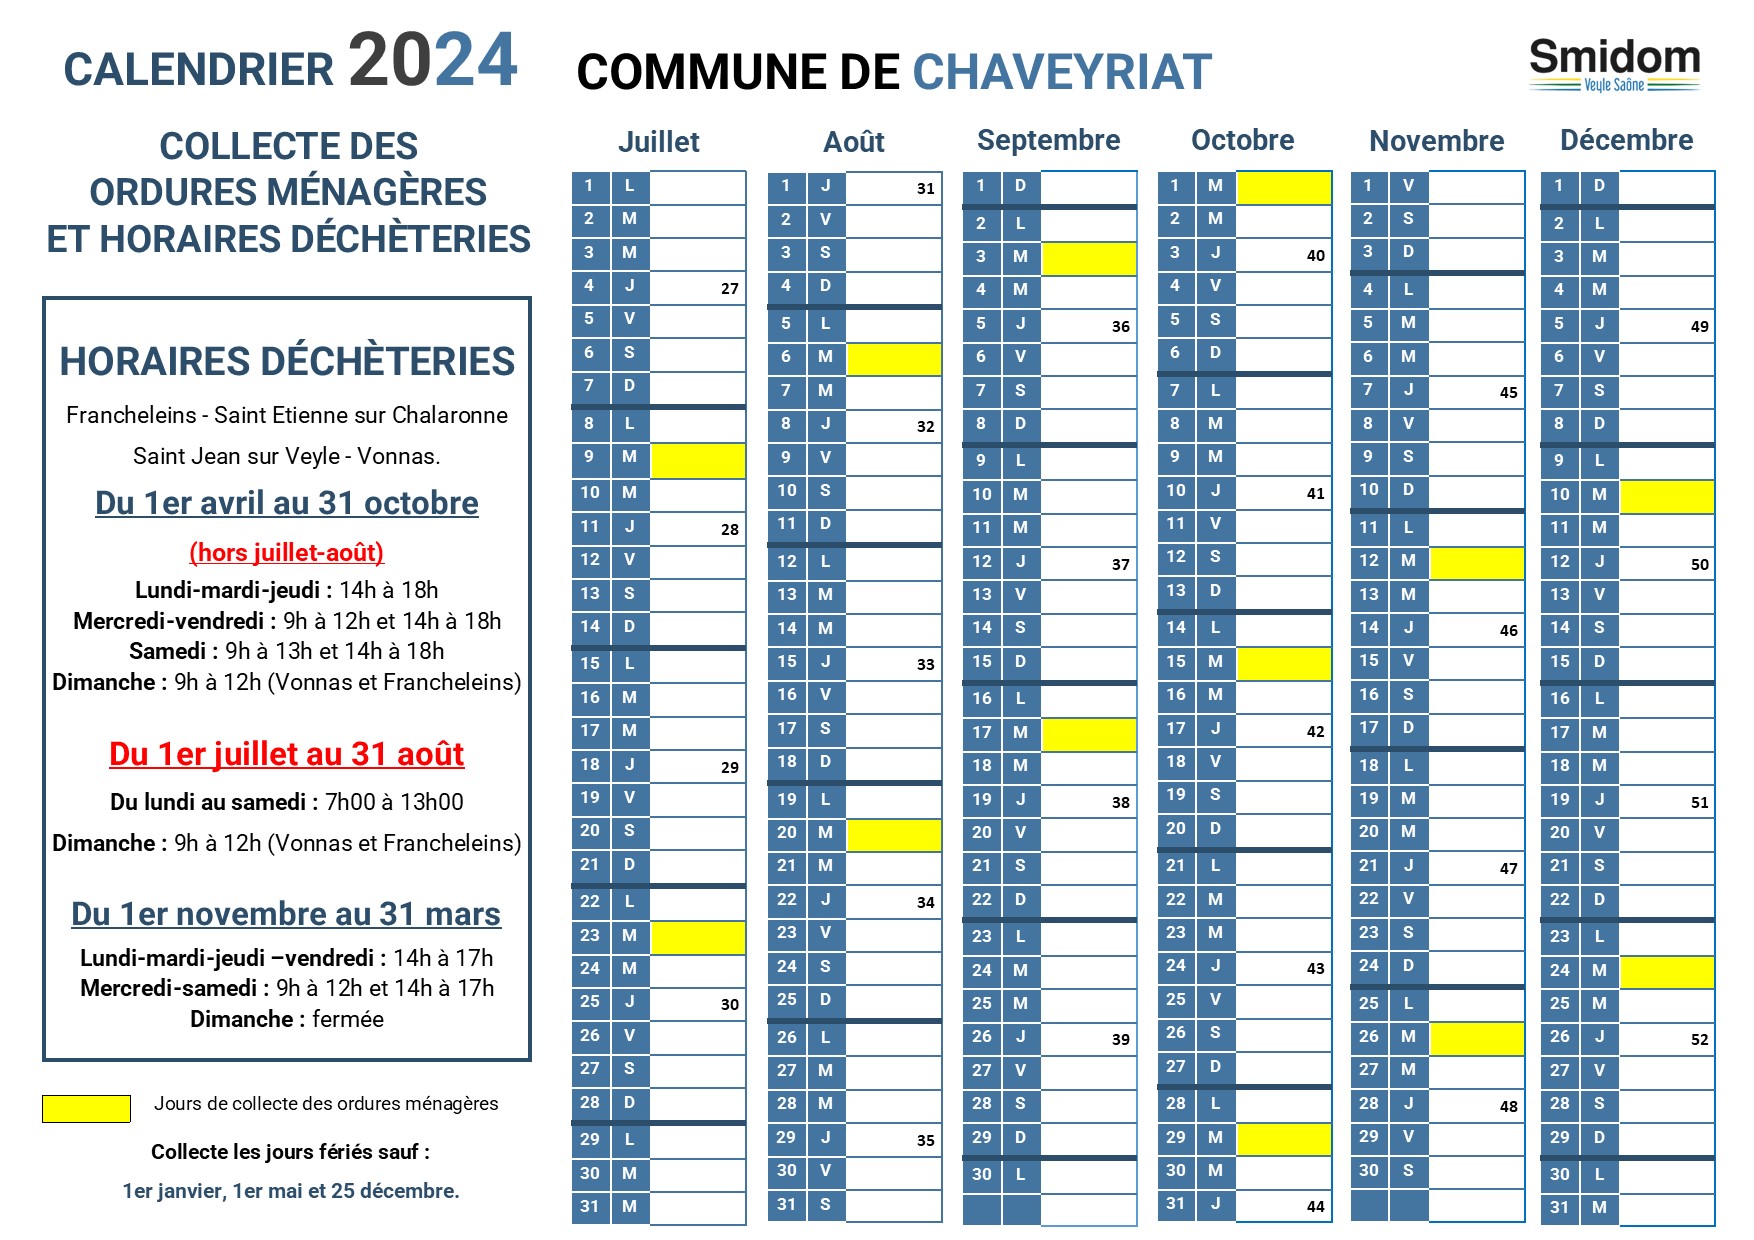 CHAVEYRIAT - Calendrier 2024 - 2.jpg